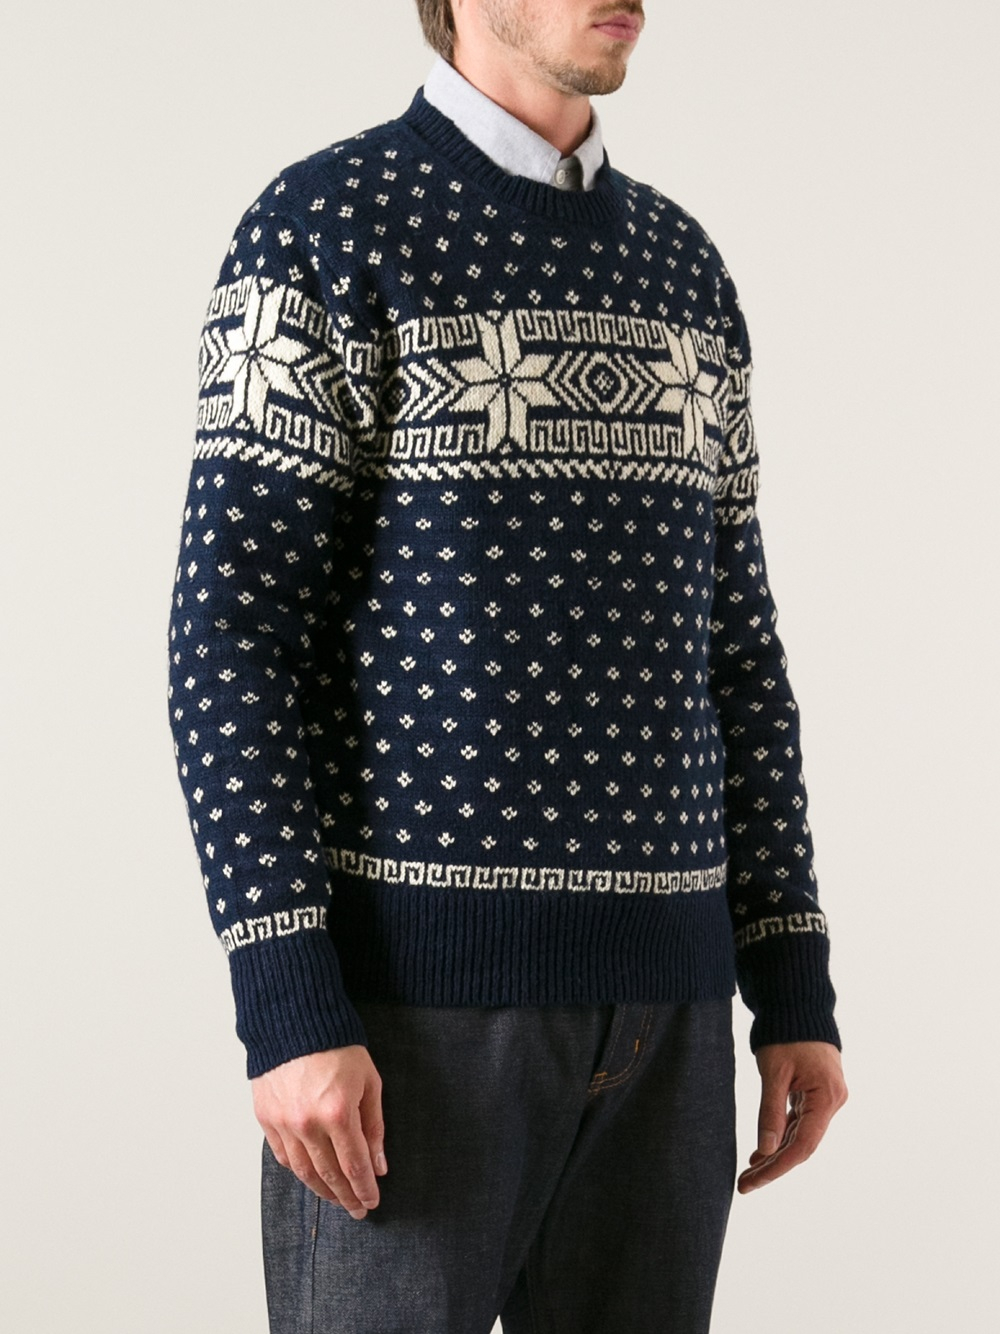 Polo Ralph Lauren Intarsia Knit Sweater in Blue for Men - Lyst